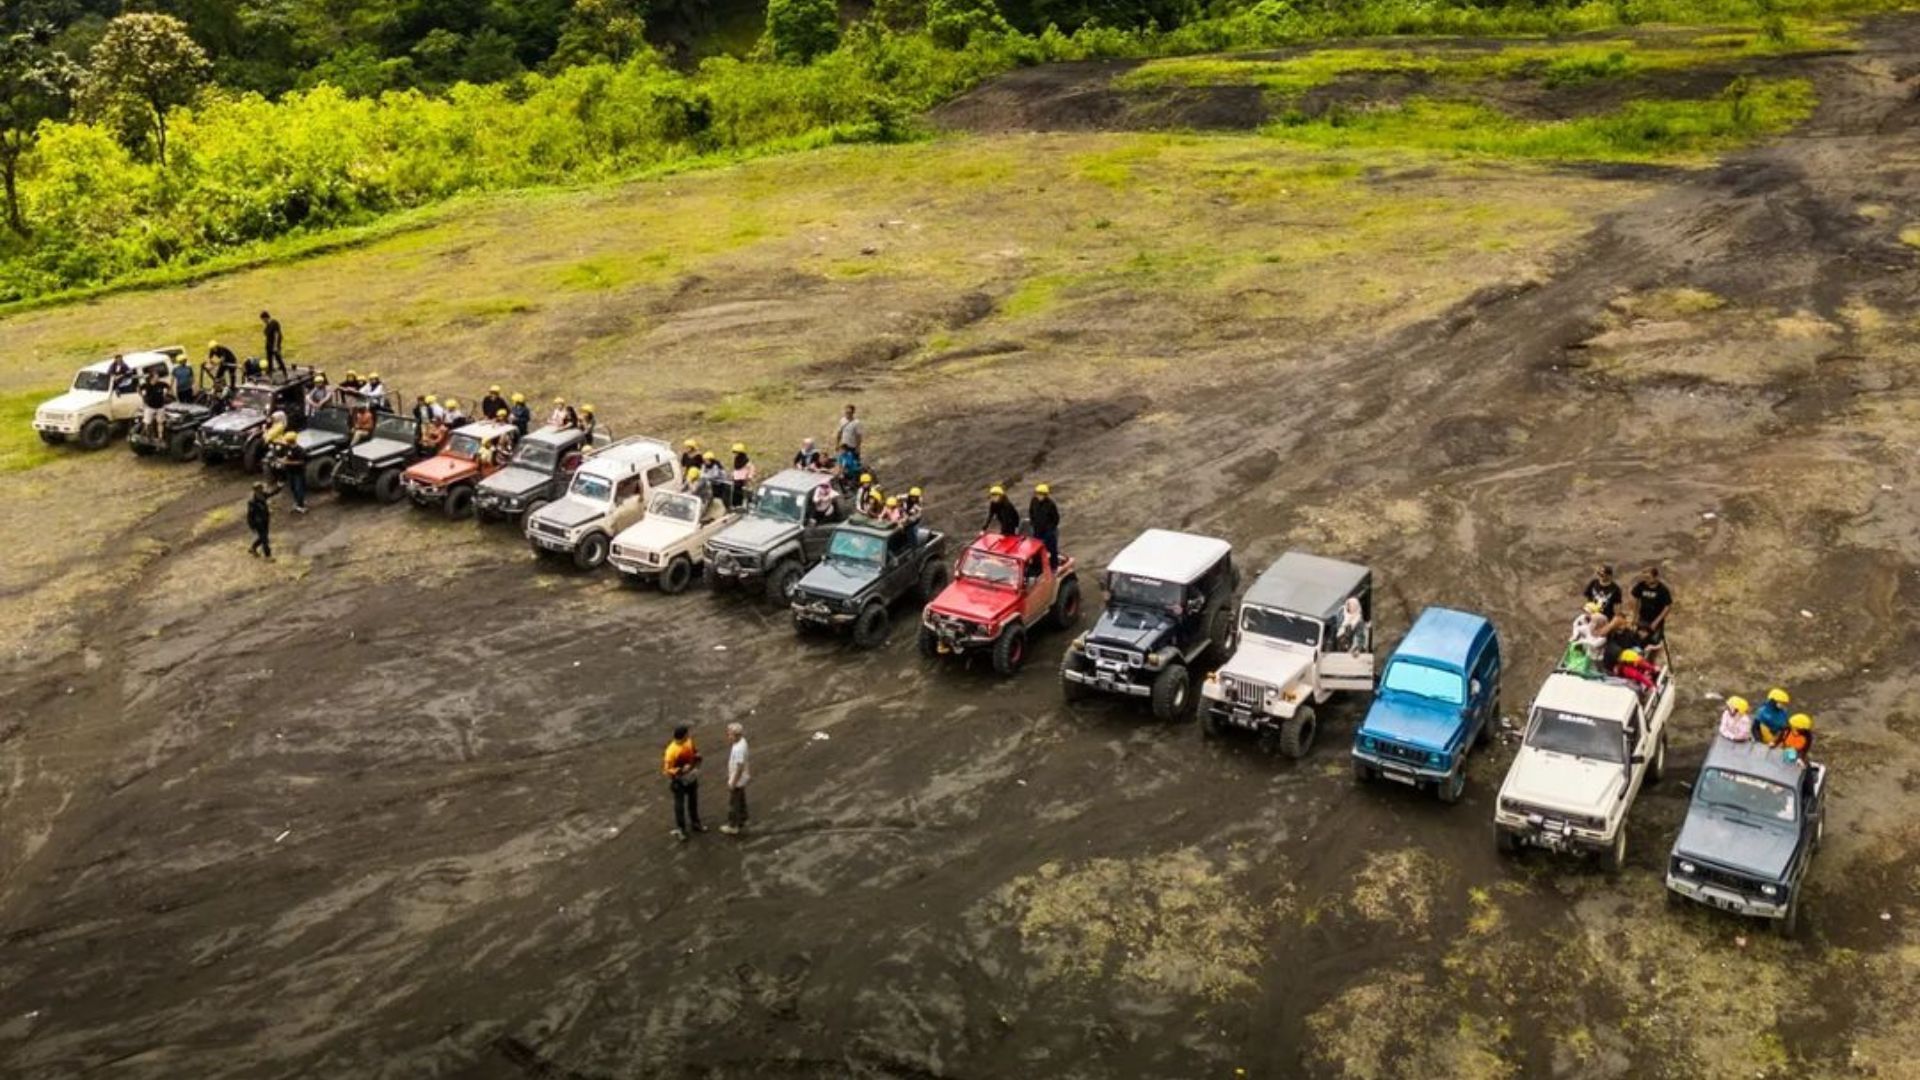 Wisata ekstrim offroad kini bisa dinikmati di area Gunung Galunggung, Tasikmalaya./ Instagram/ komunitas_jeep_tour_galunggung